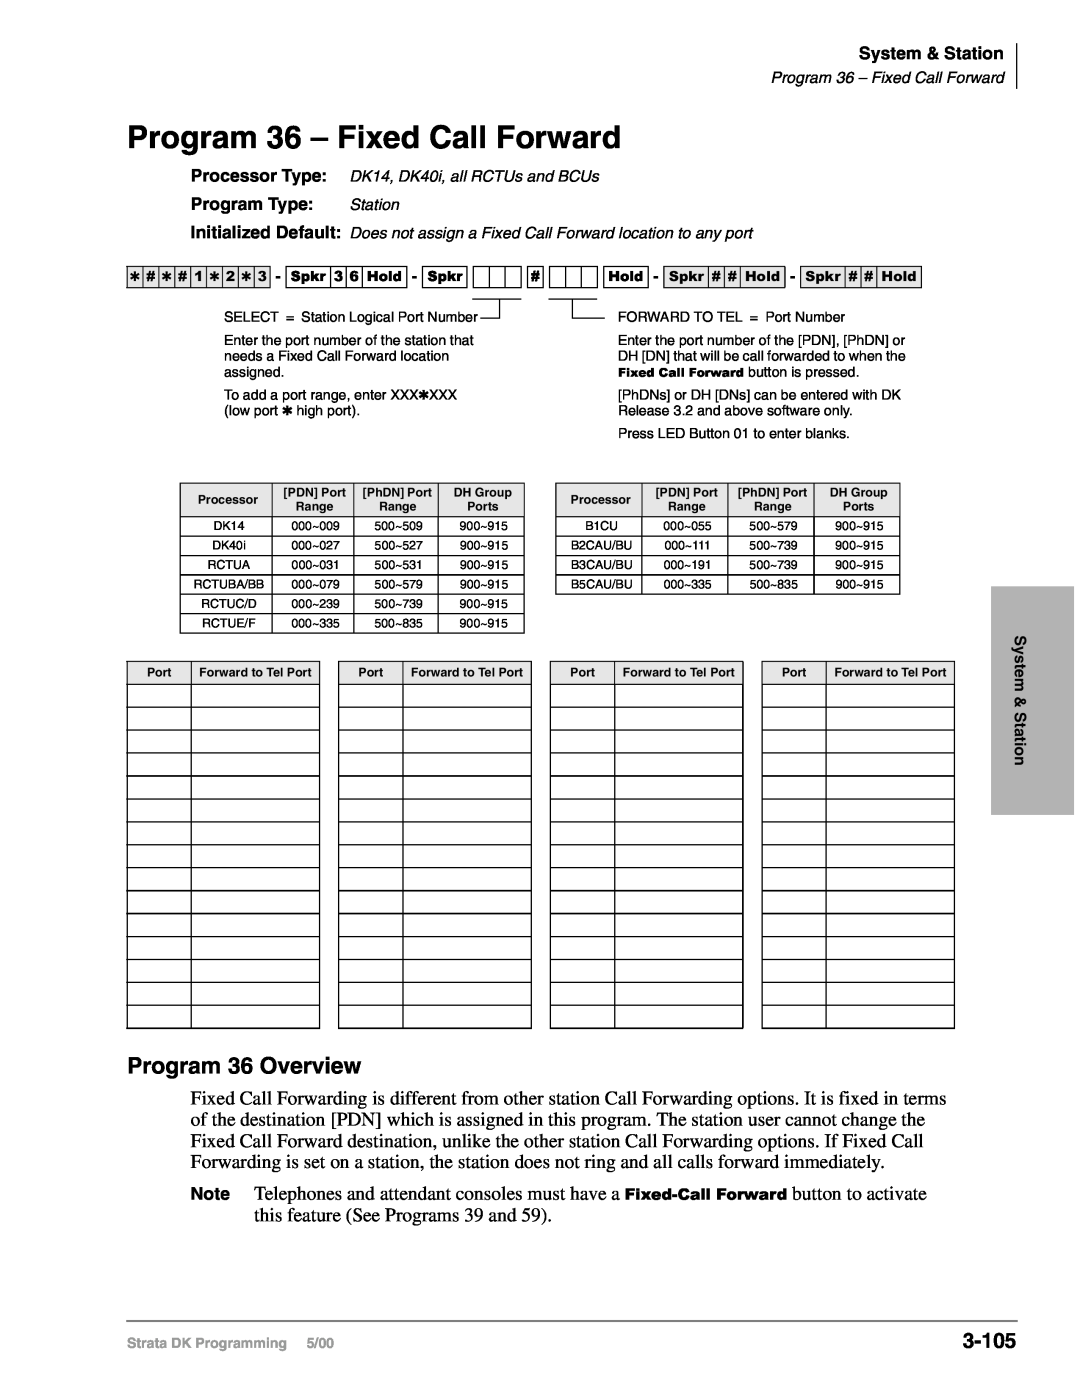 Toshiba dk14, DK40I, DK424I manual Program 36 – Fixed Call Forward, Program 36 Overview, 3-105 